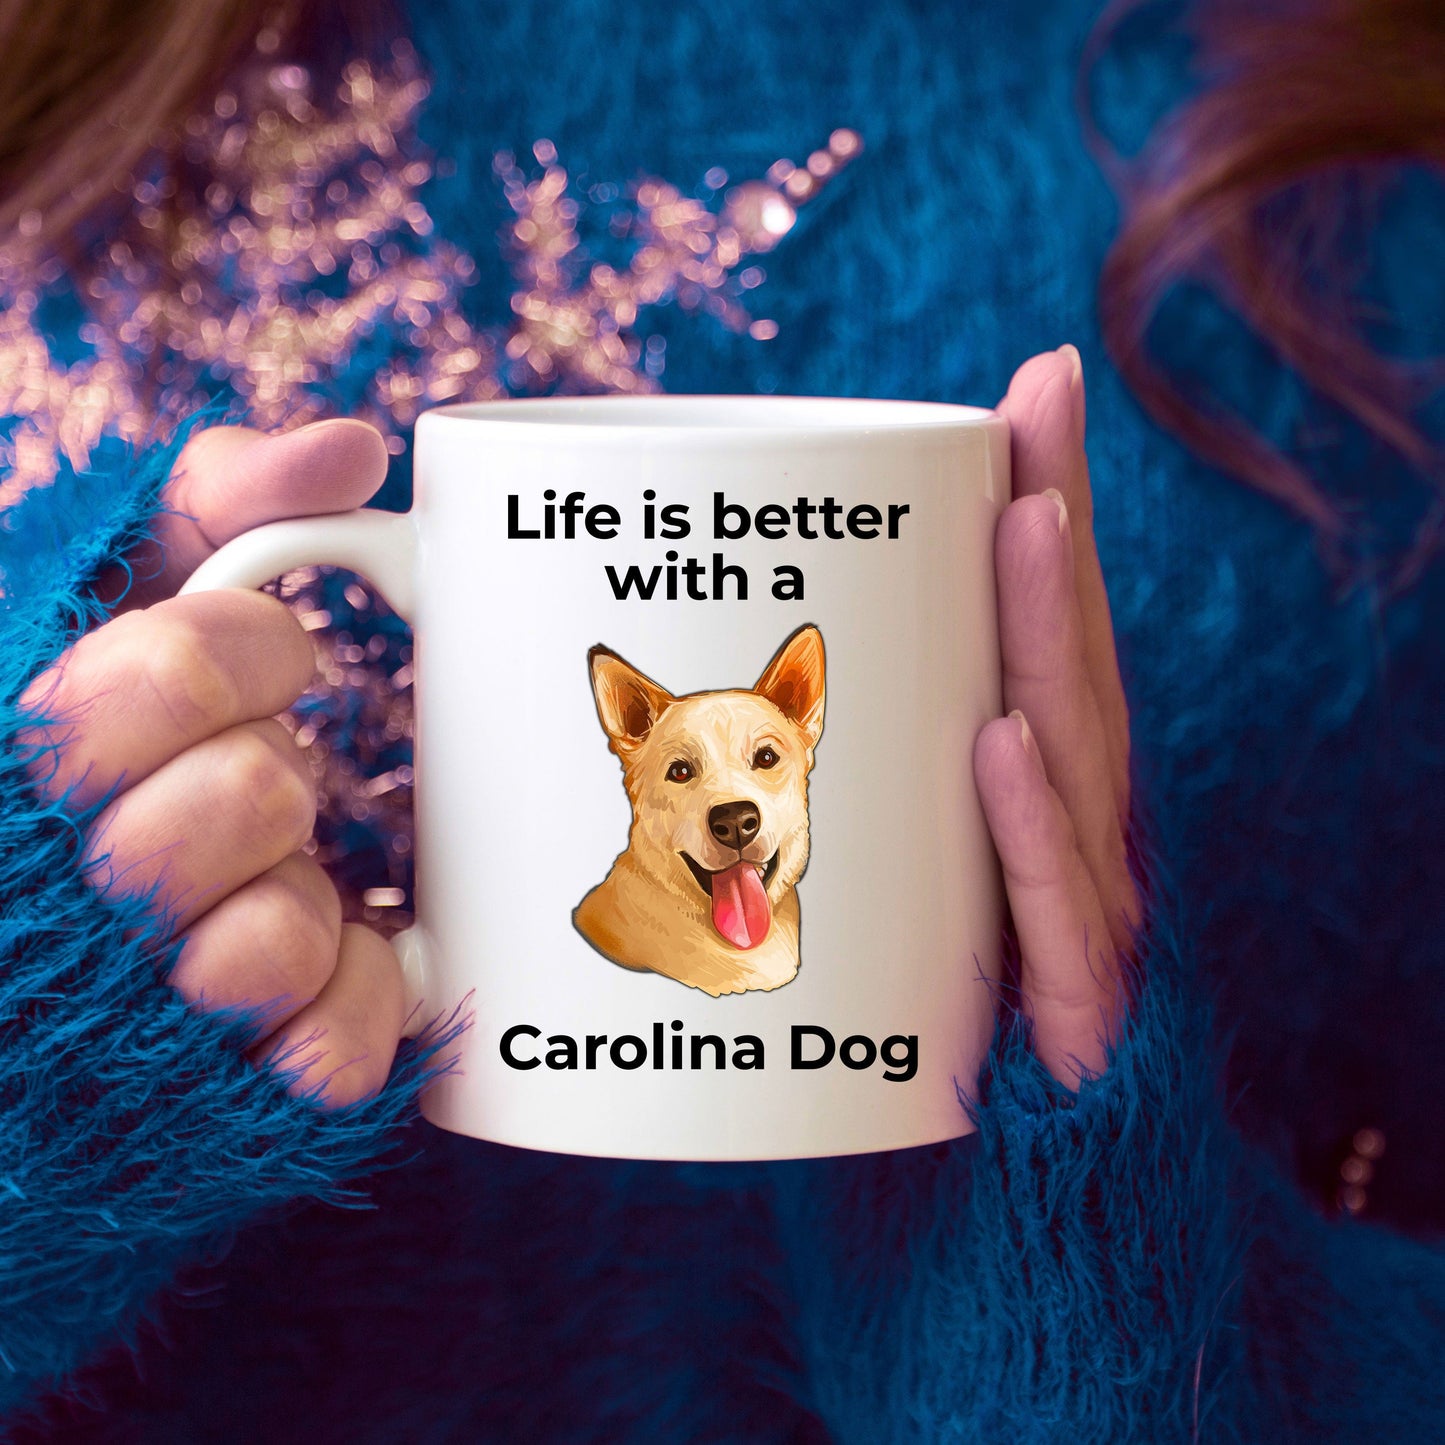 Carolina Yellow Dog Coffee Mug - Life is Better with a Carolina Dog